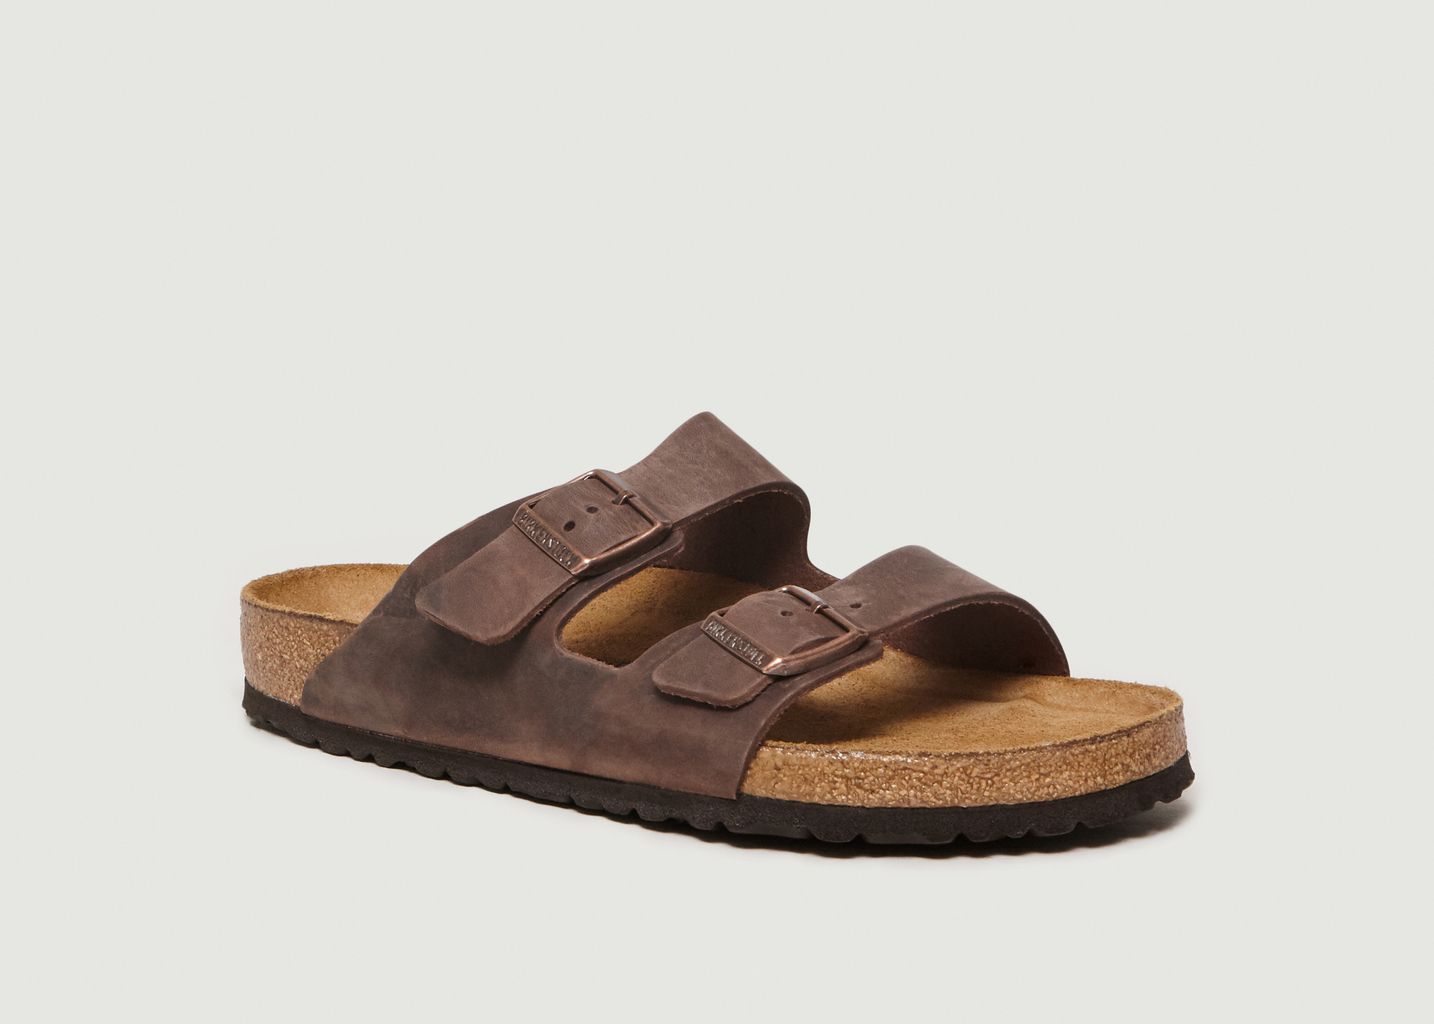 Arizona Leather Sandals - Birkenstock